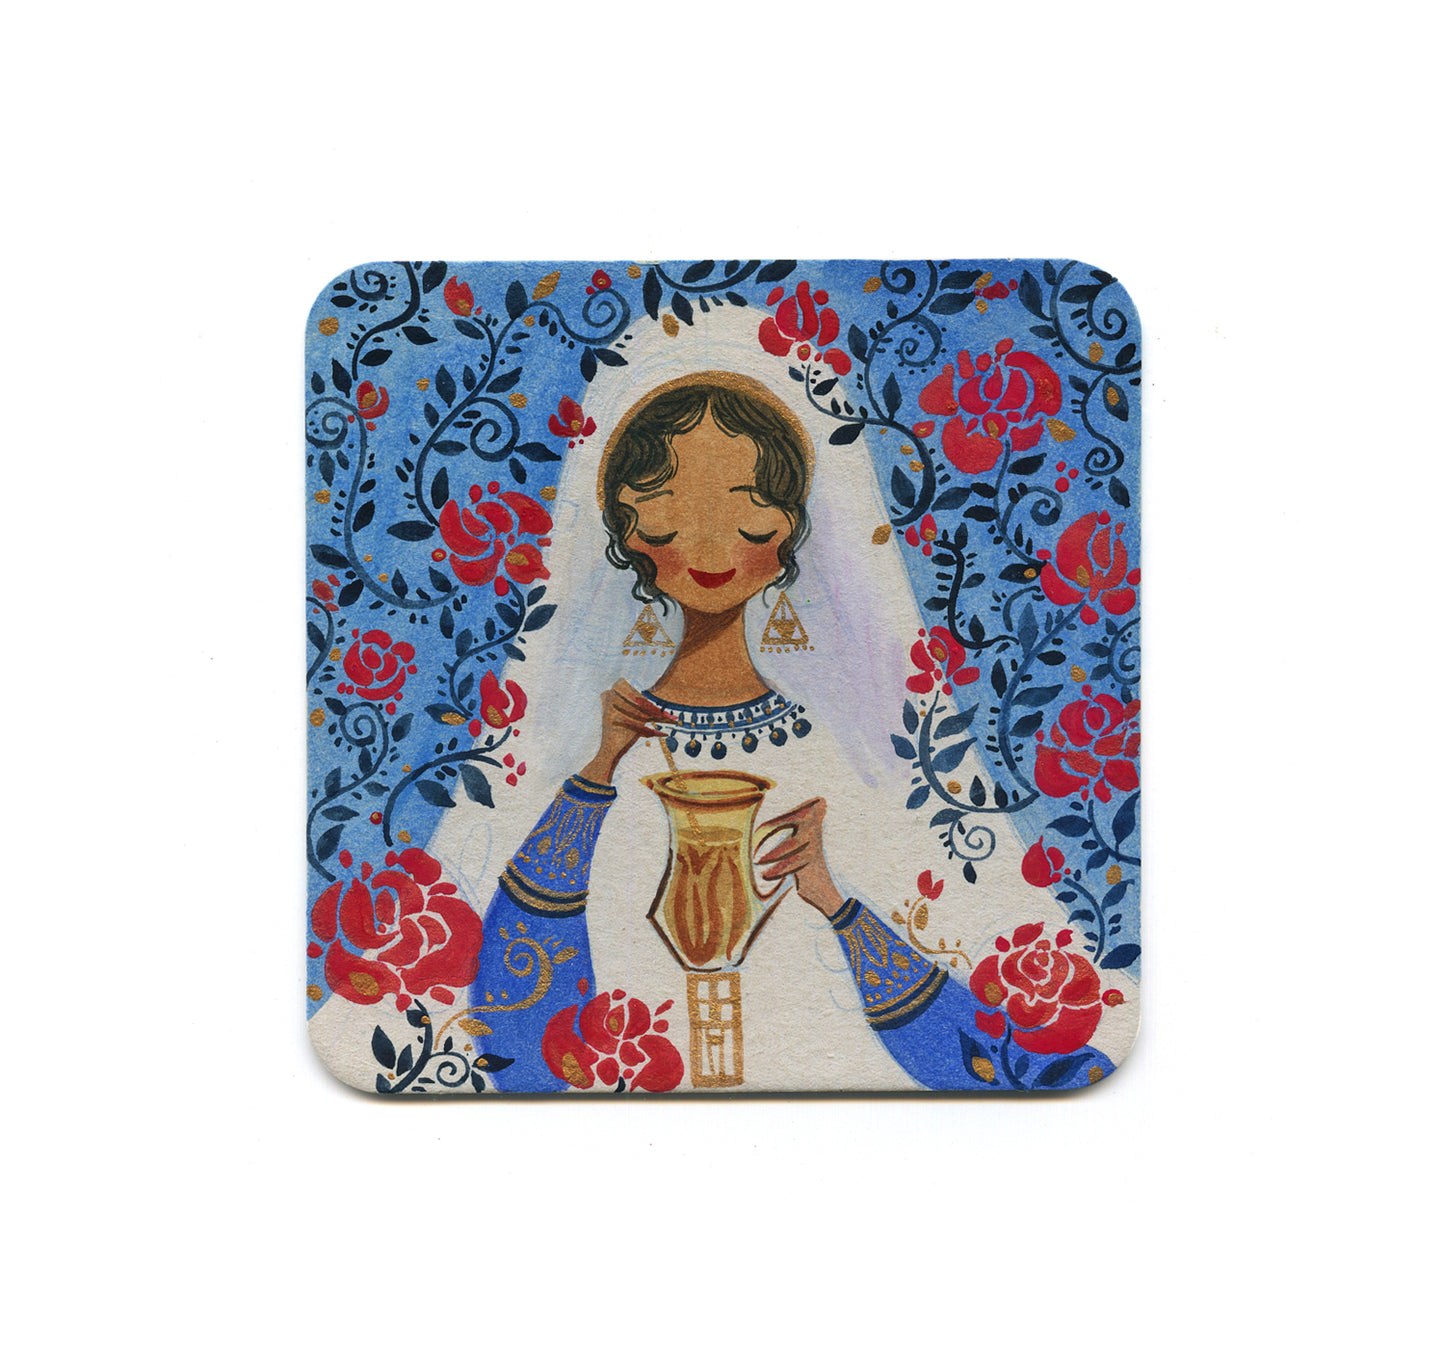 S2 Alina Chau - Rose Water Coaster